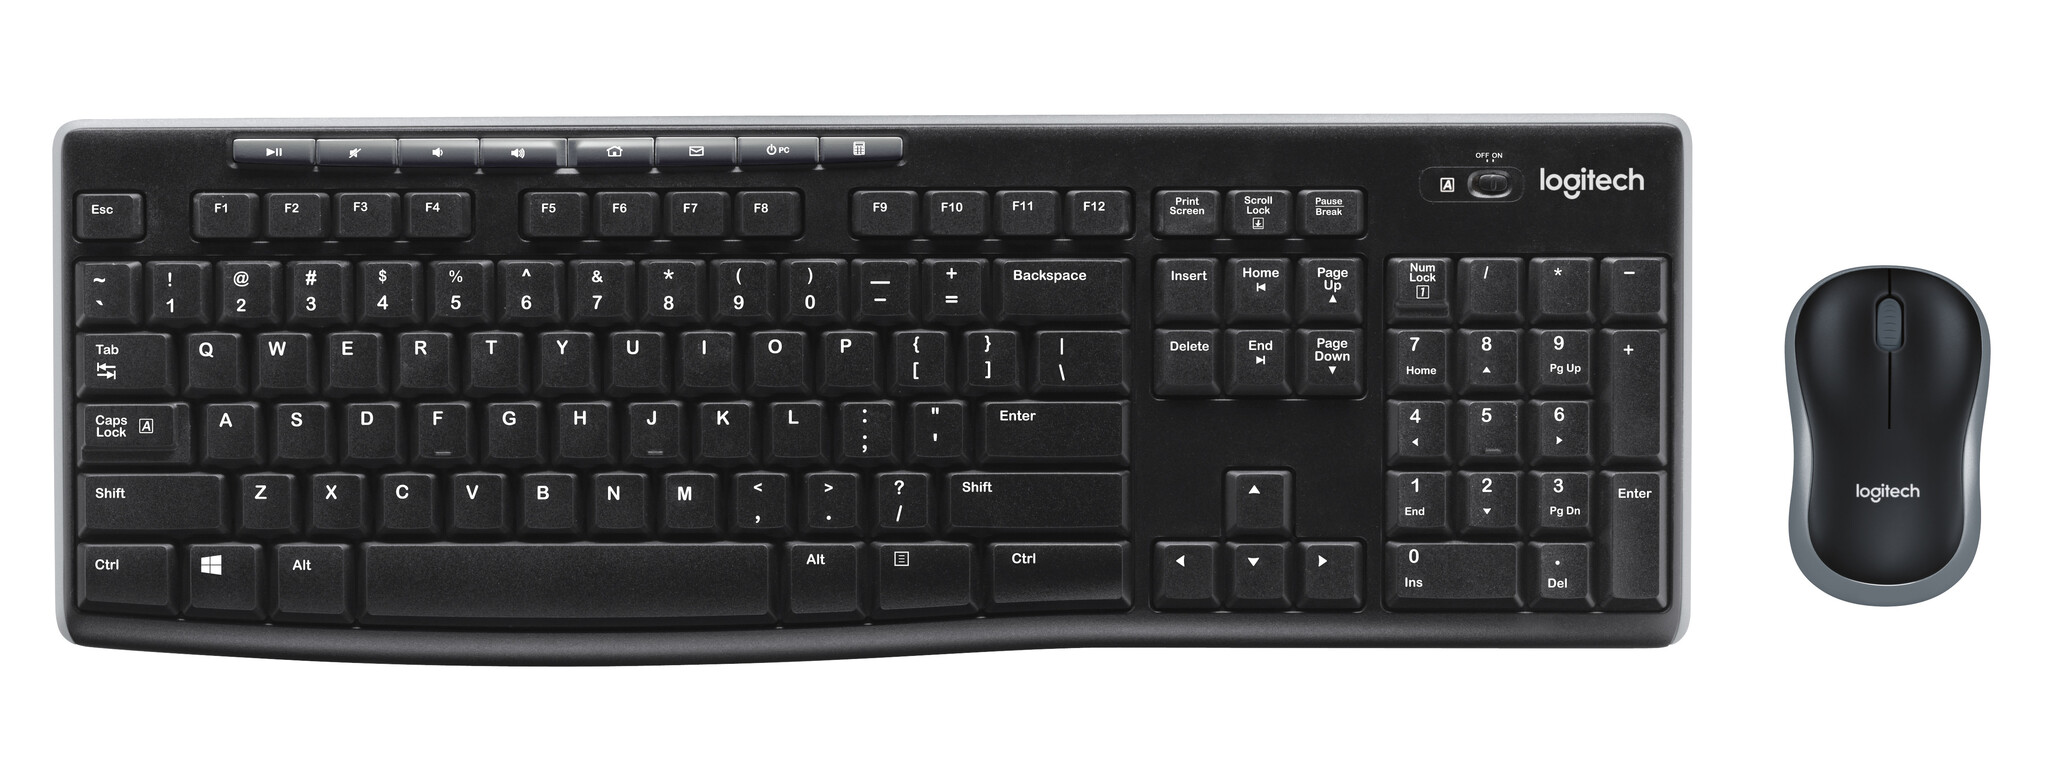 Logitech MK270 Wireless USB Keyboard with Optical Mouse – Black (920-004523) #365747